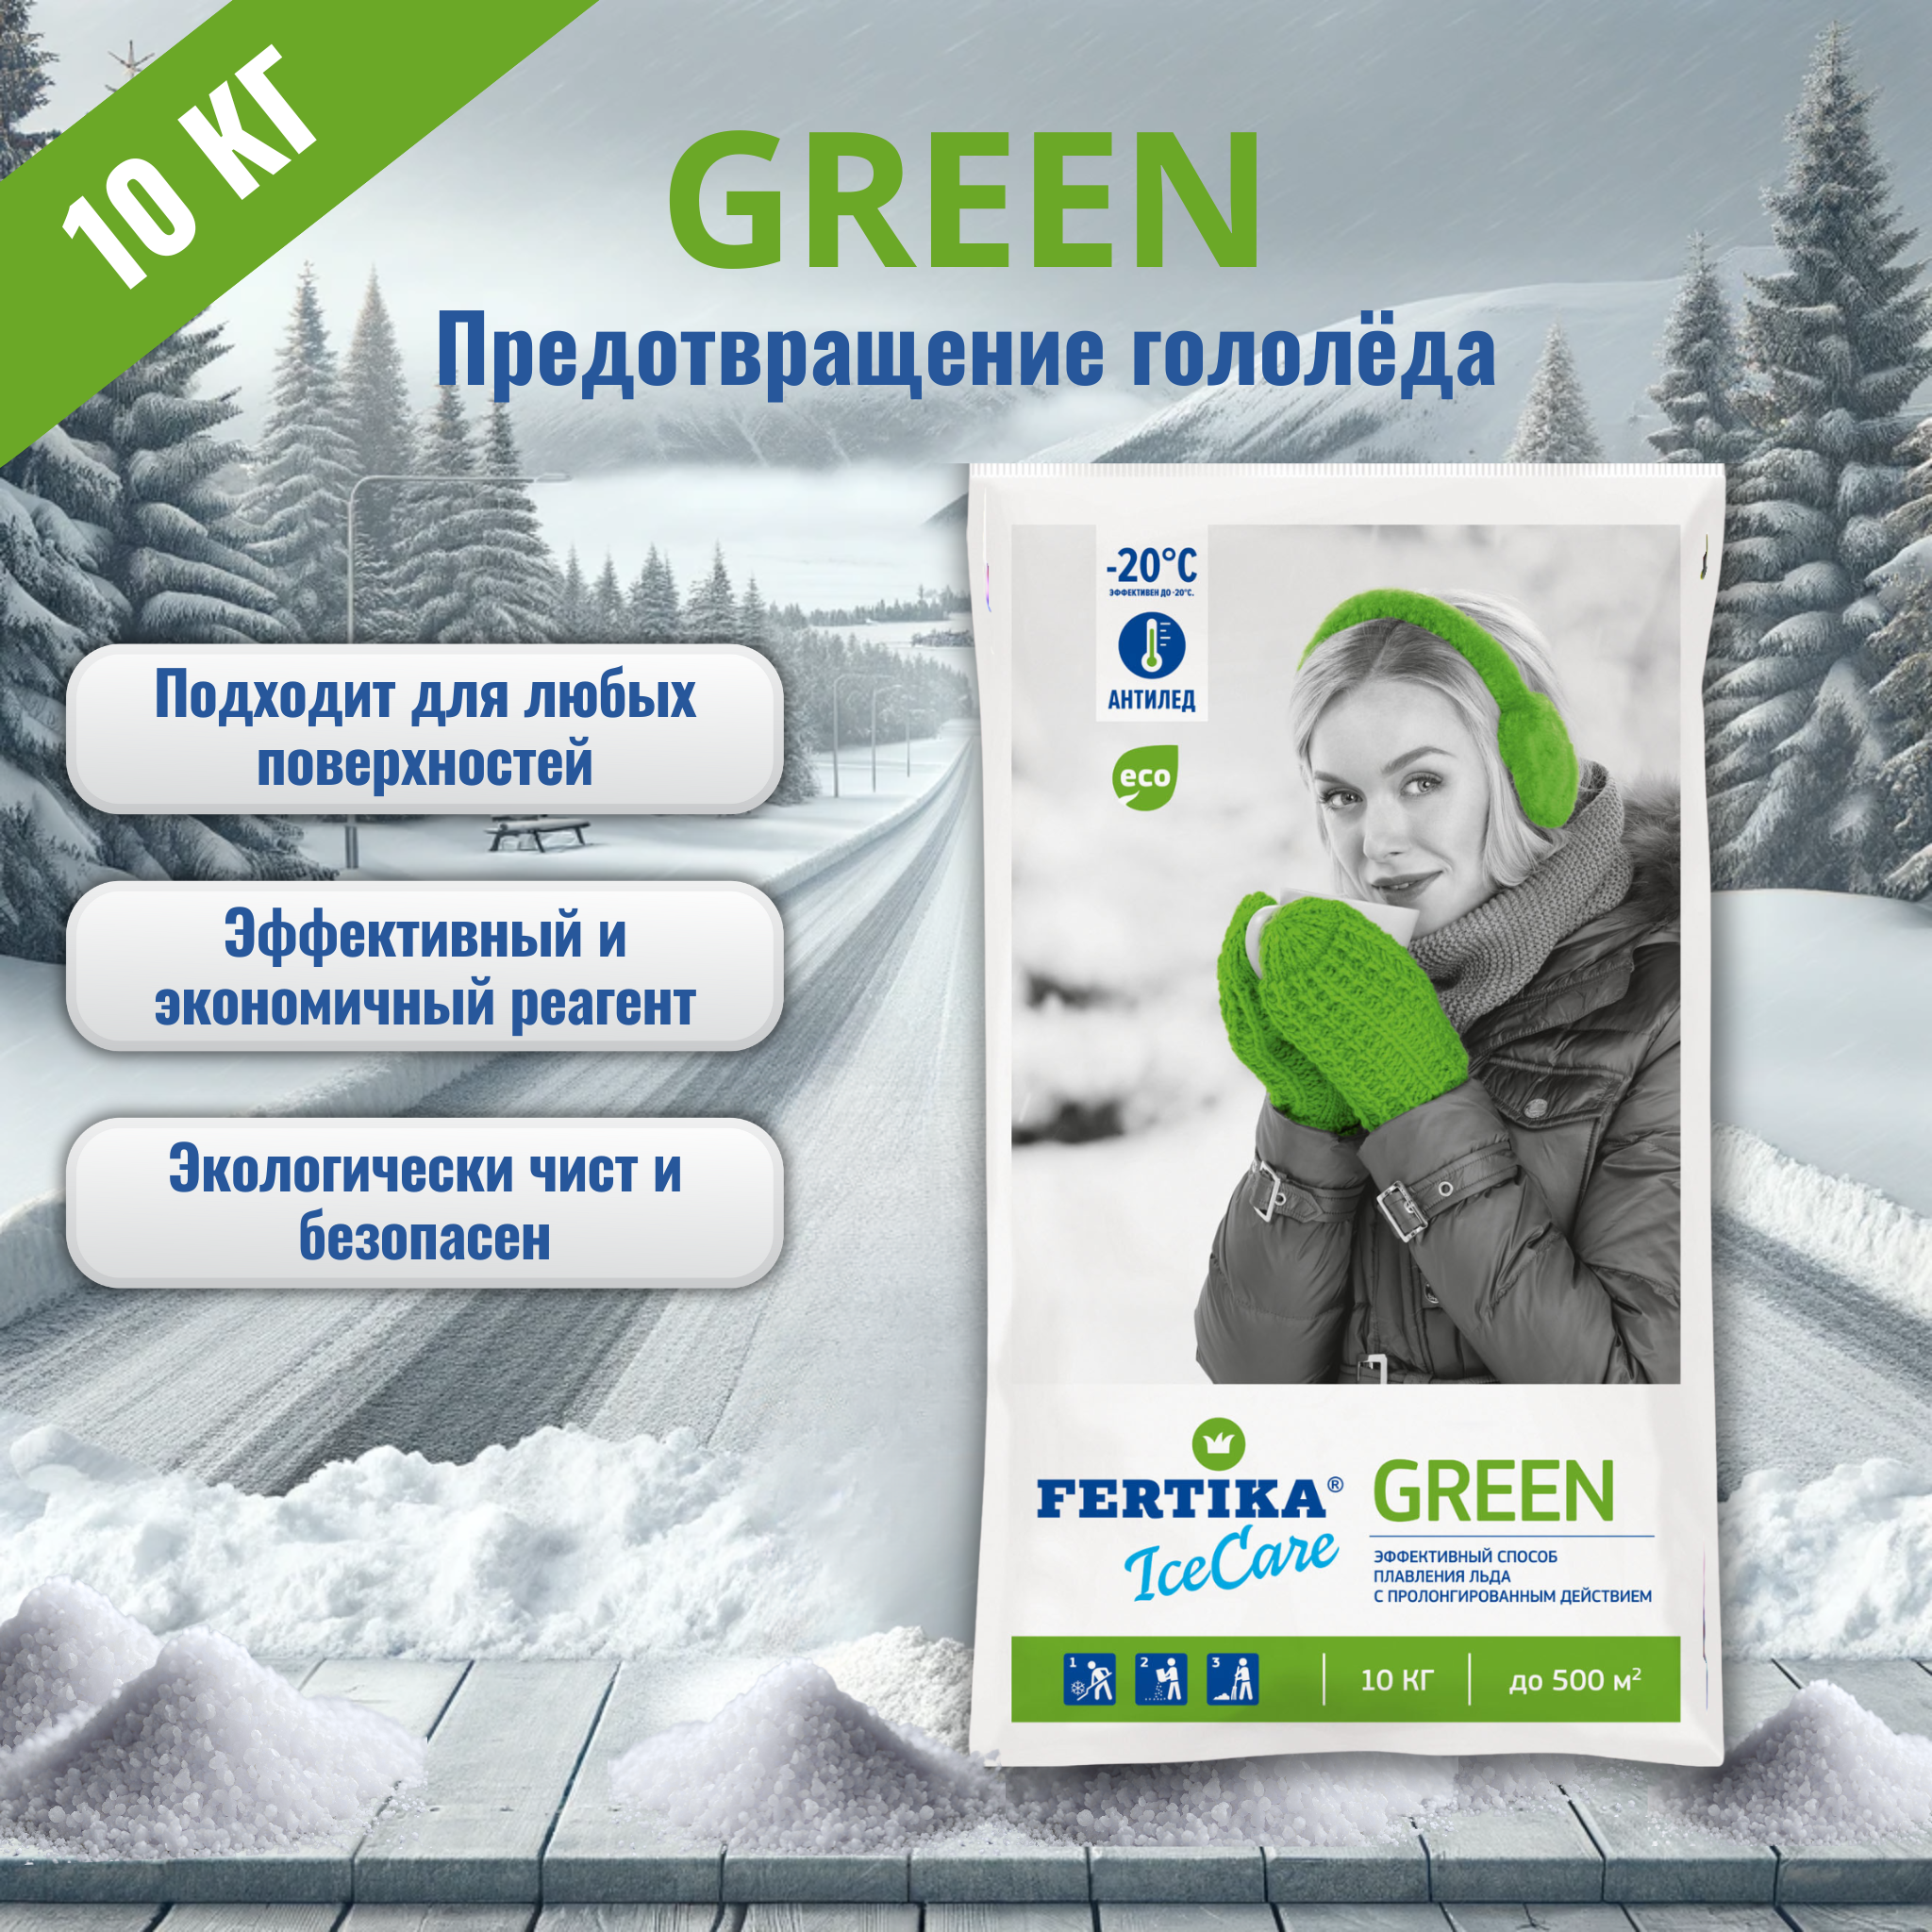 Противогололедный реагент 10 кг. Fertika IceCare GREEN, антигололед - фотография № 1